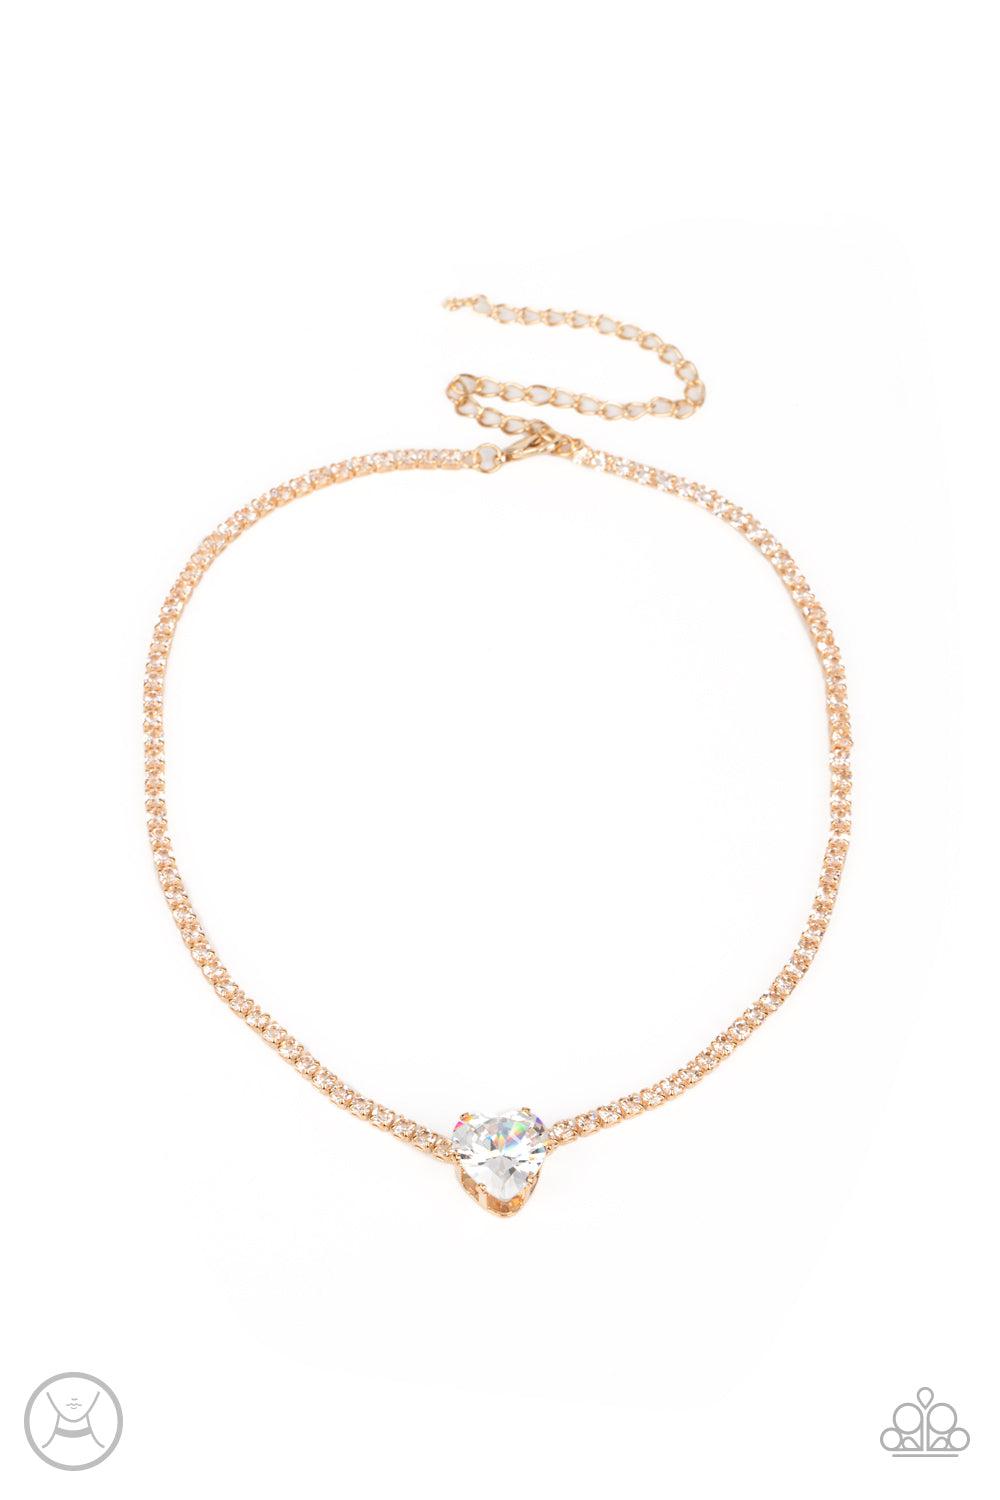 Flirty Fiance Gold & White Rhinestone Heart Choker Necklace - Paparazzi Accessories- lightbox - CarasShop.com - $5 Jewelry by Cara Jewels